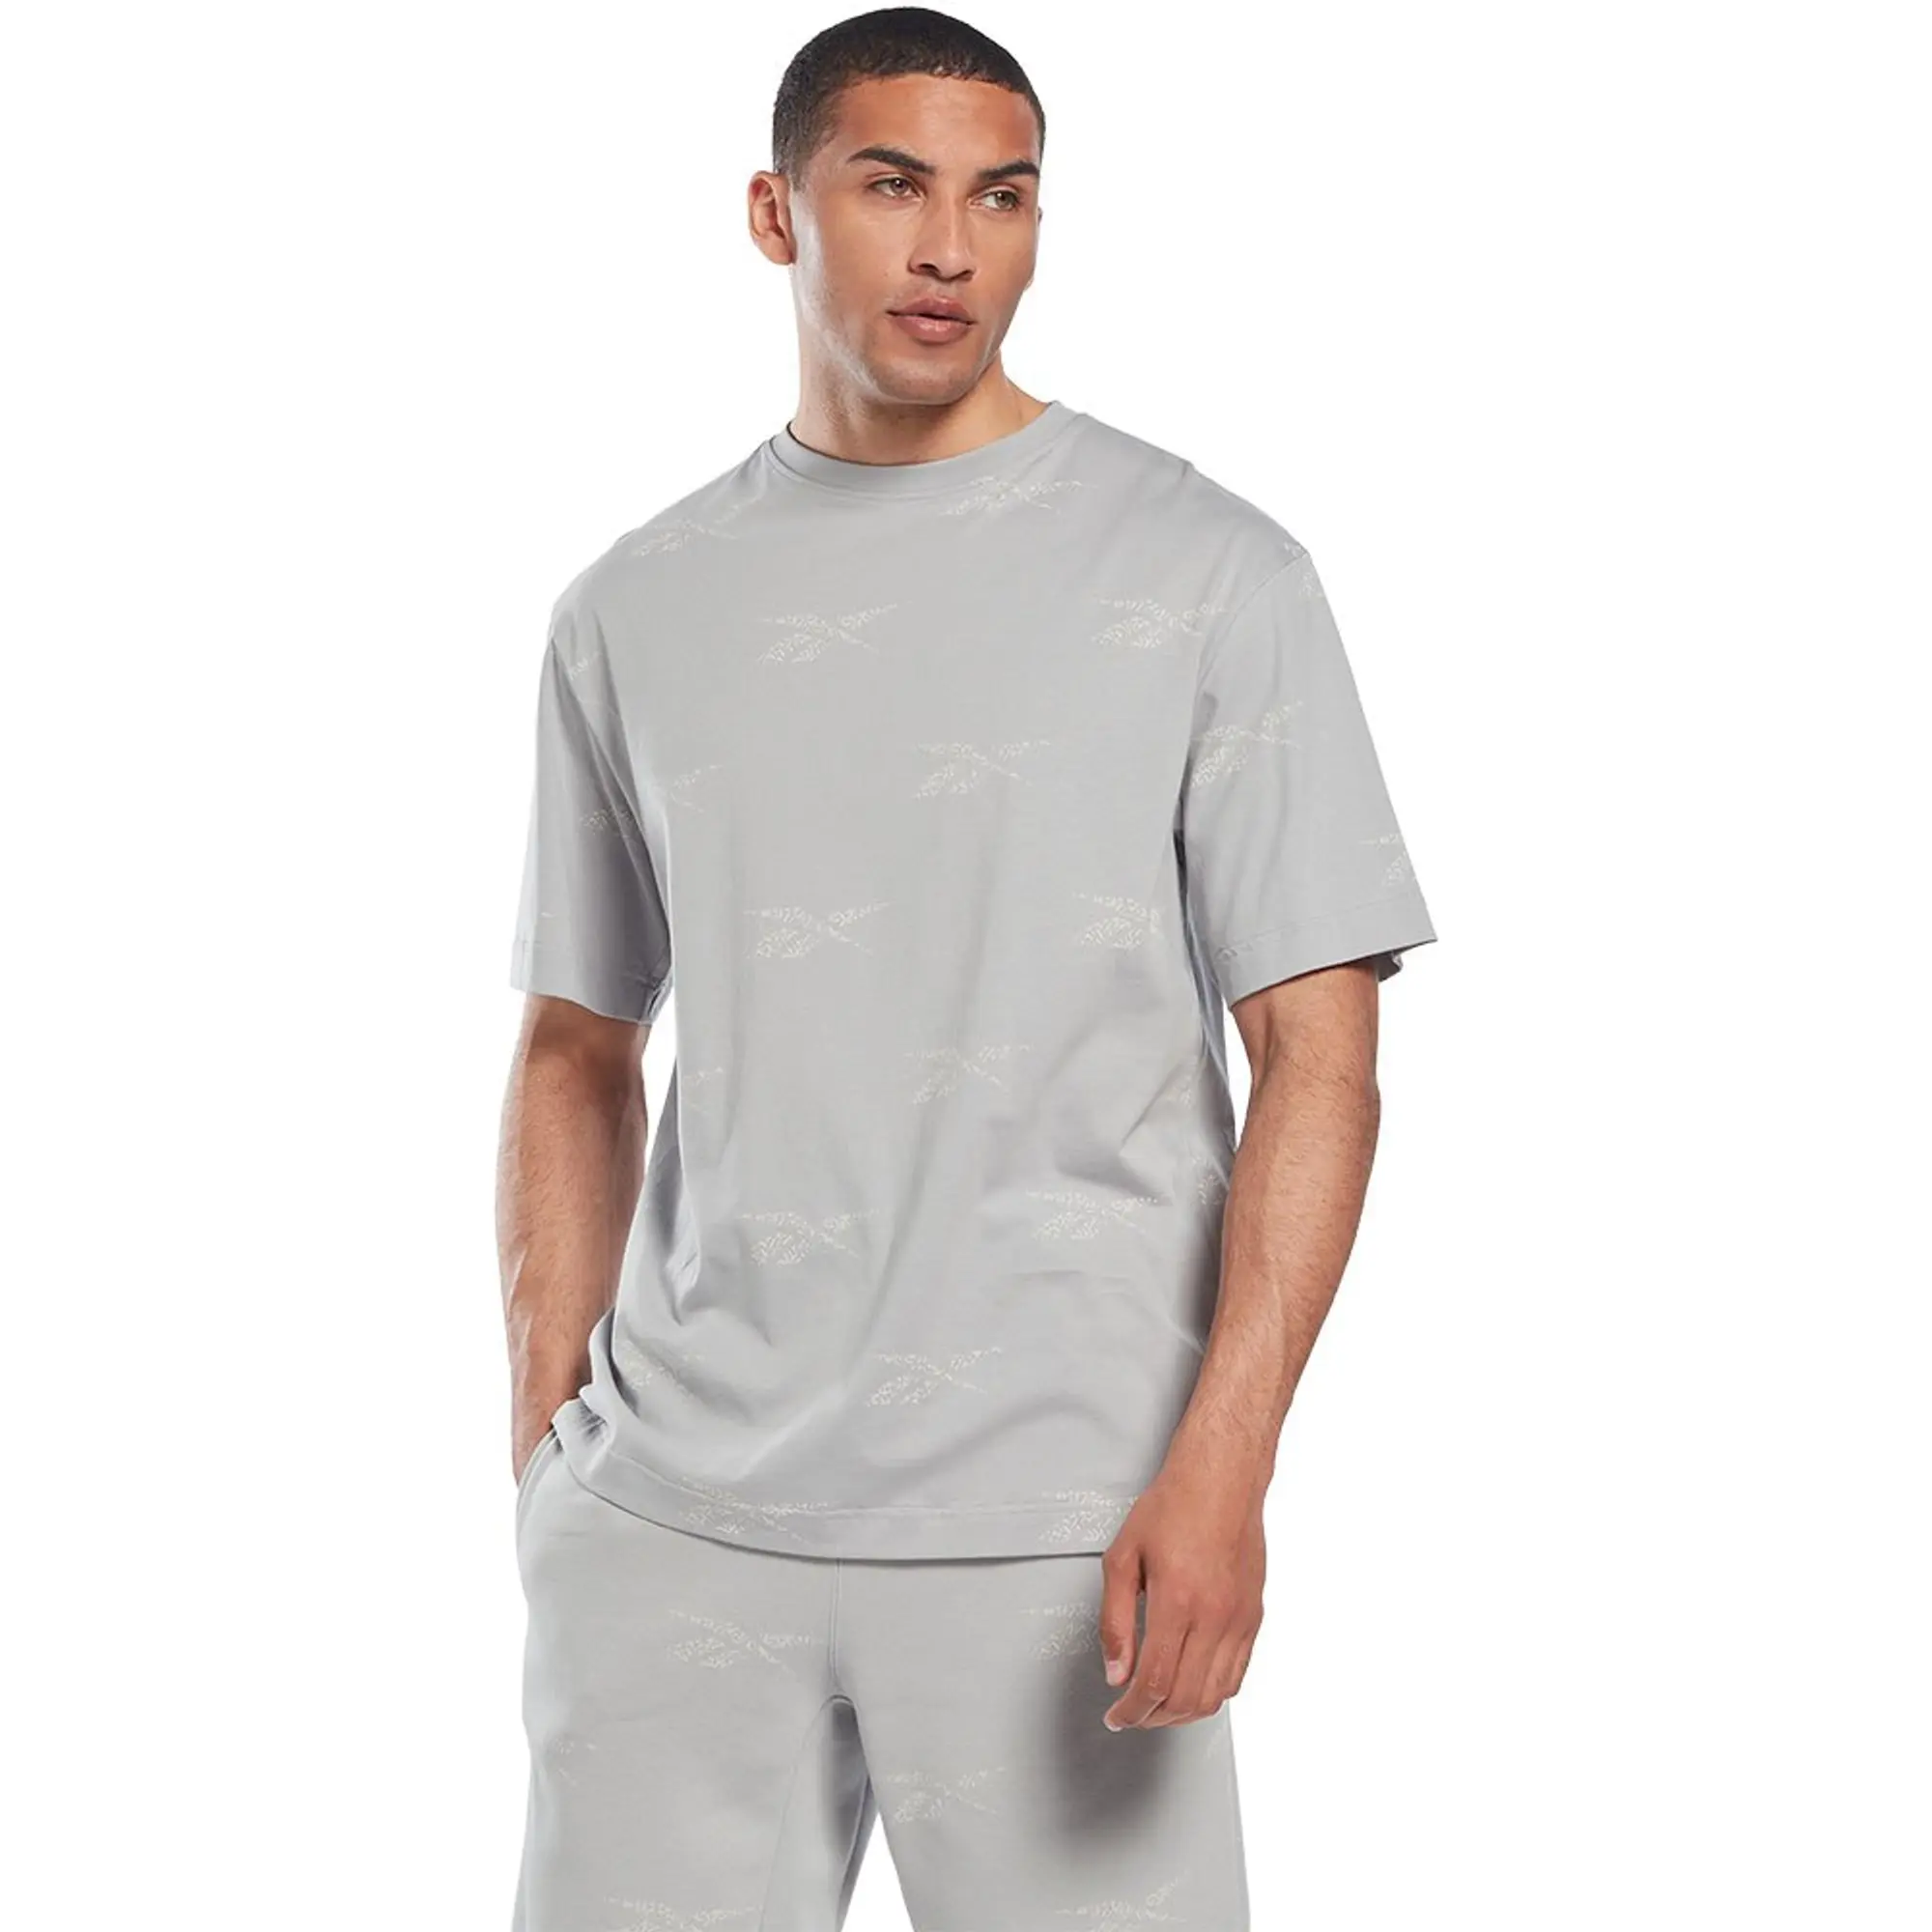 Reebok Logo T Shirt Mens - Grey